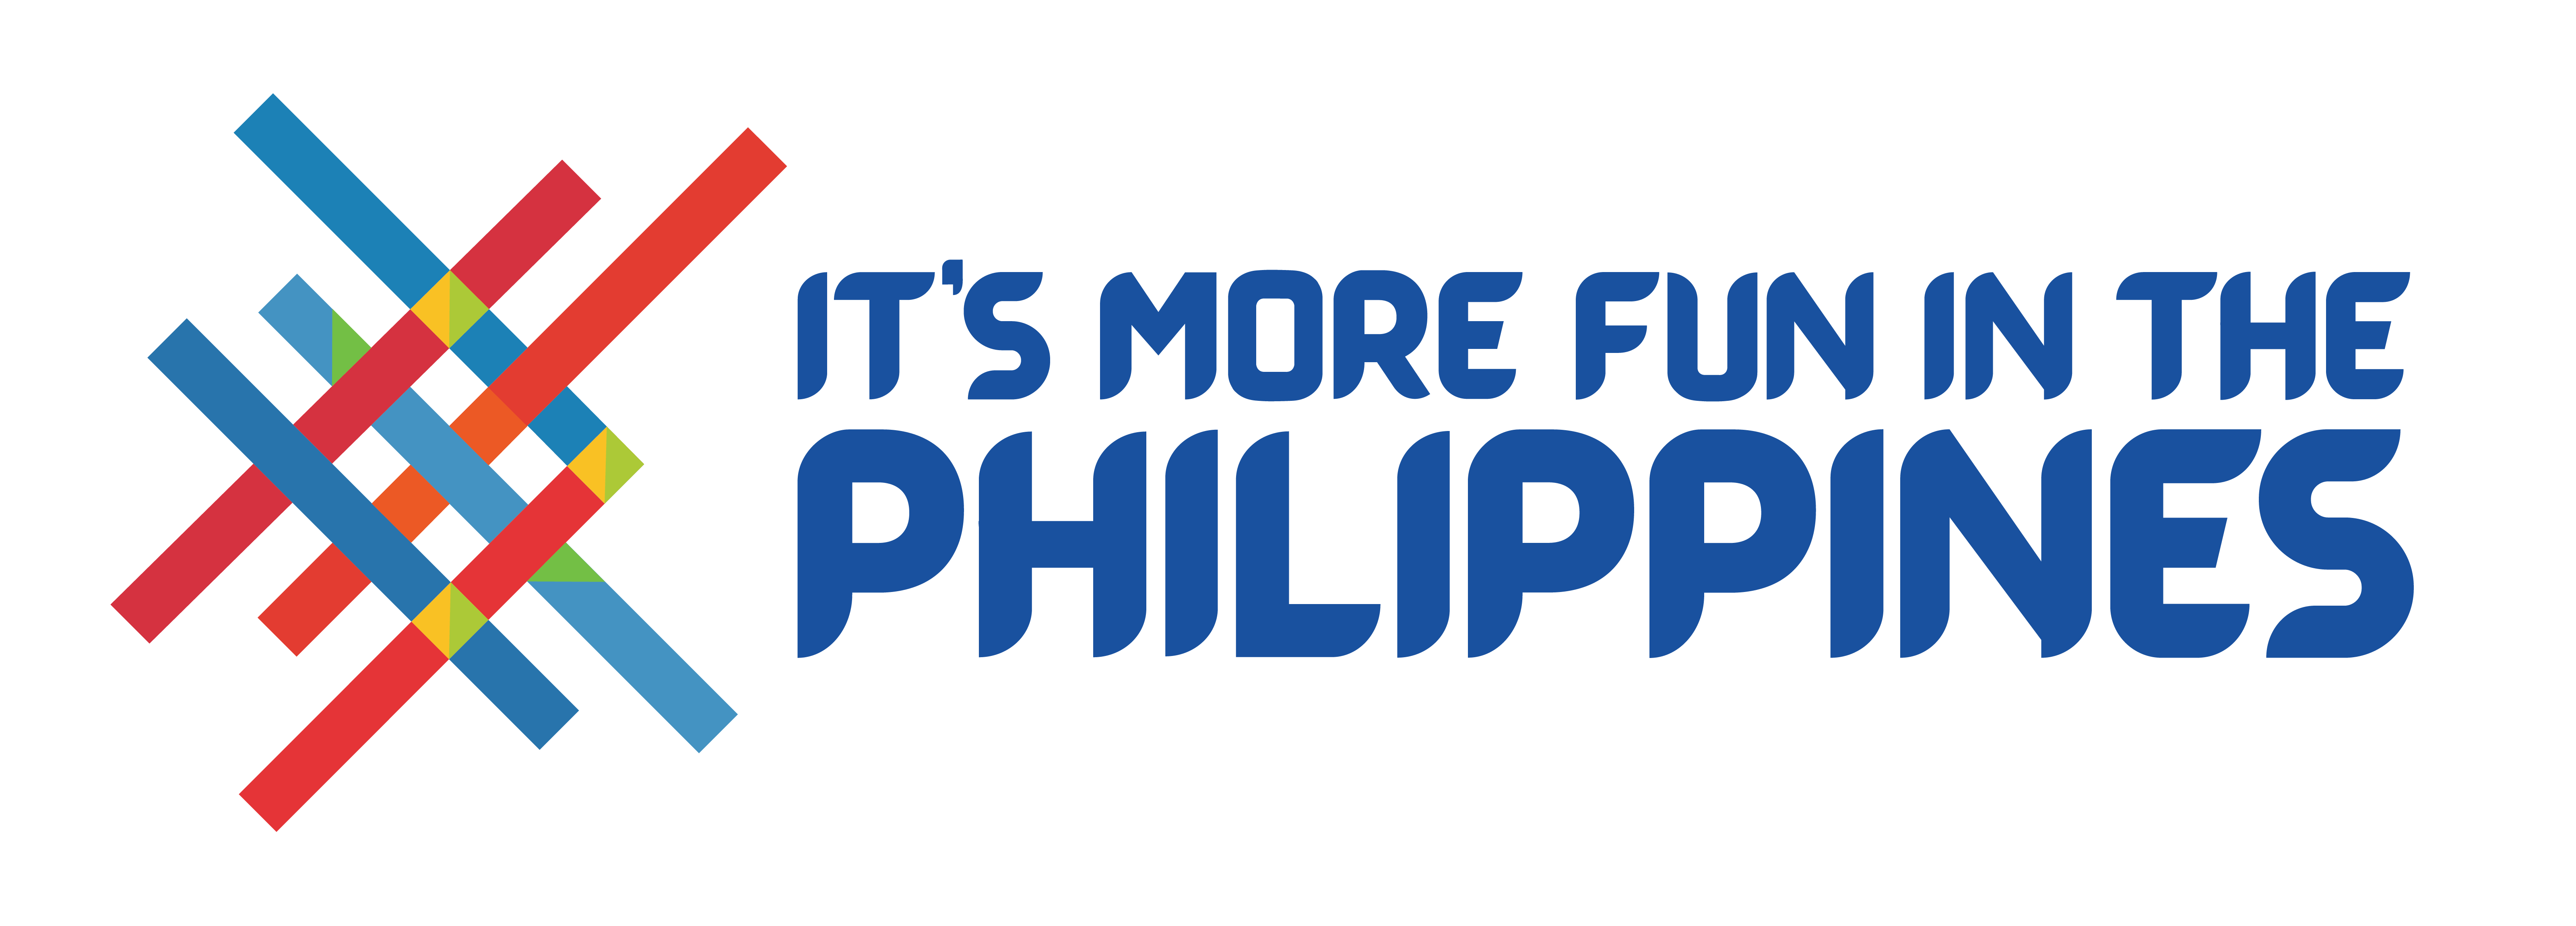 department of tourism website philippines